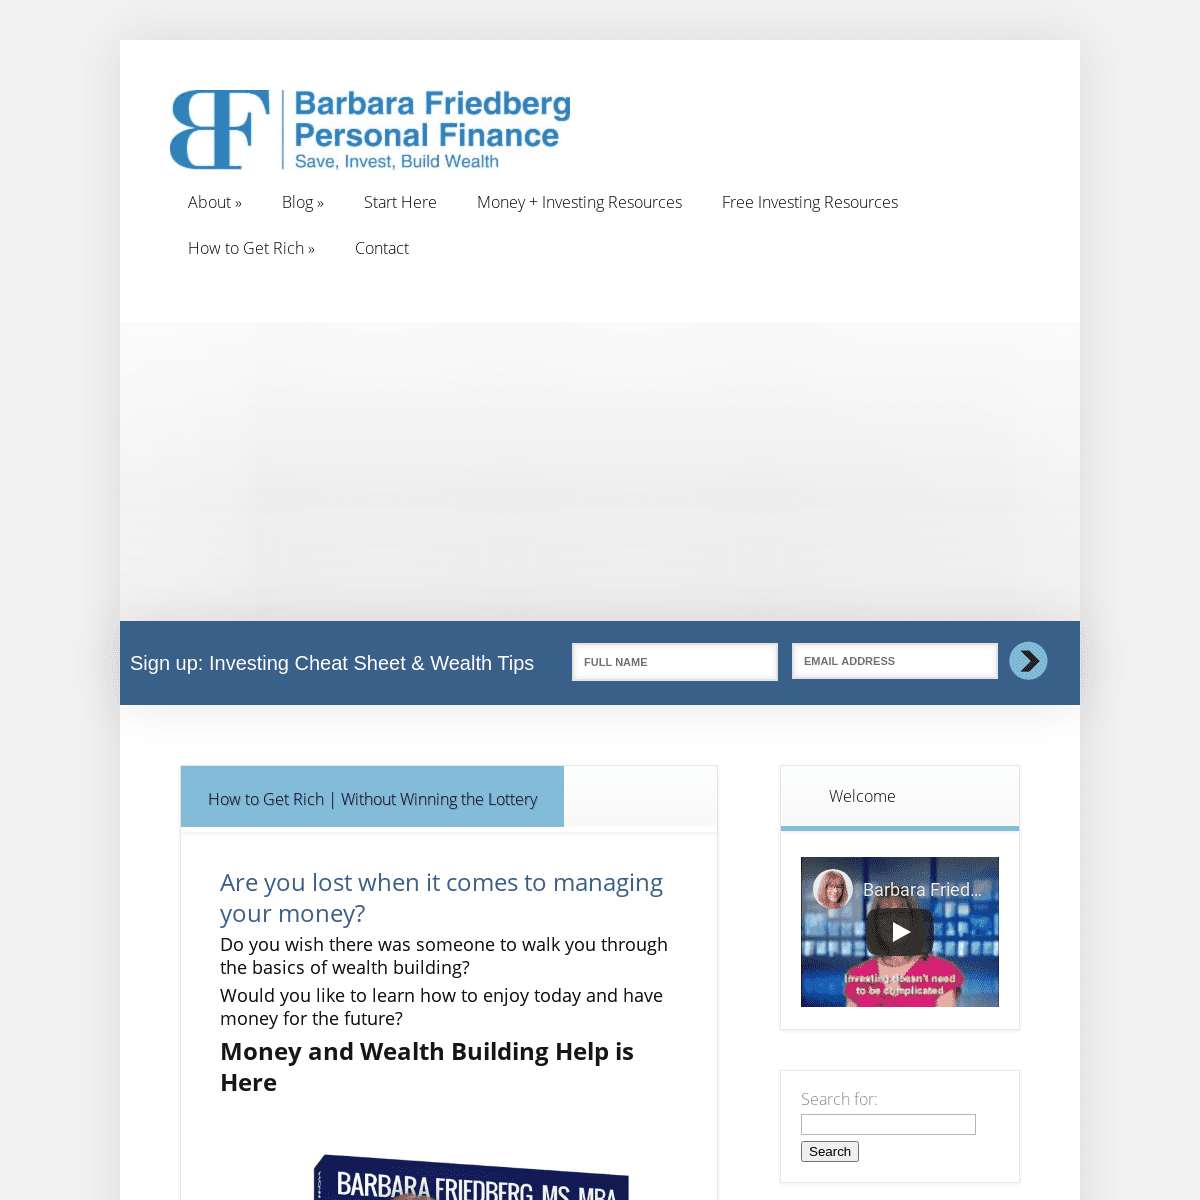 A complete backup of https://barbarafriedbergpersonalfinance.com